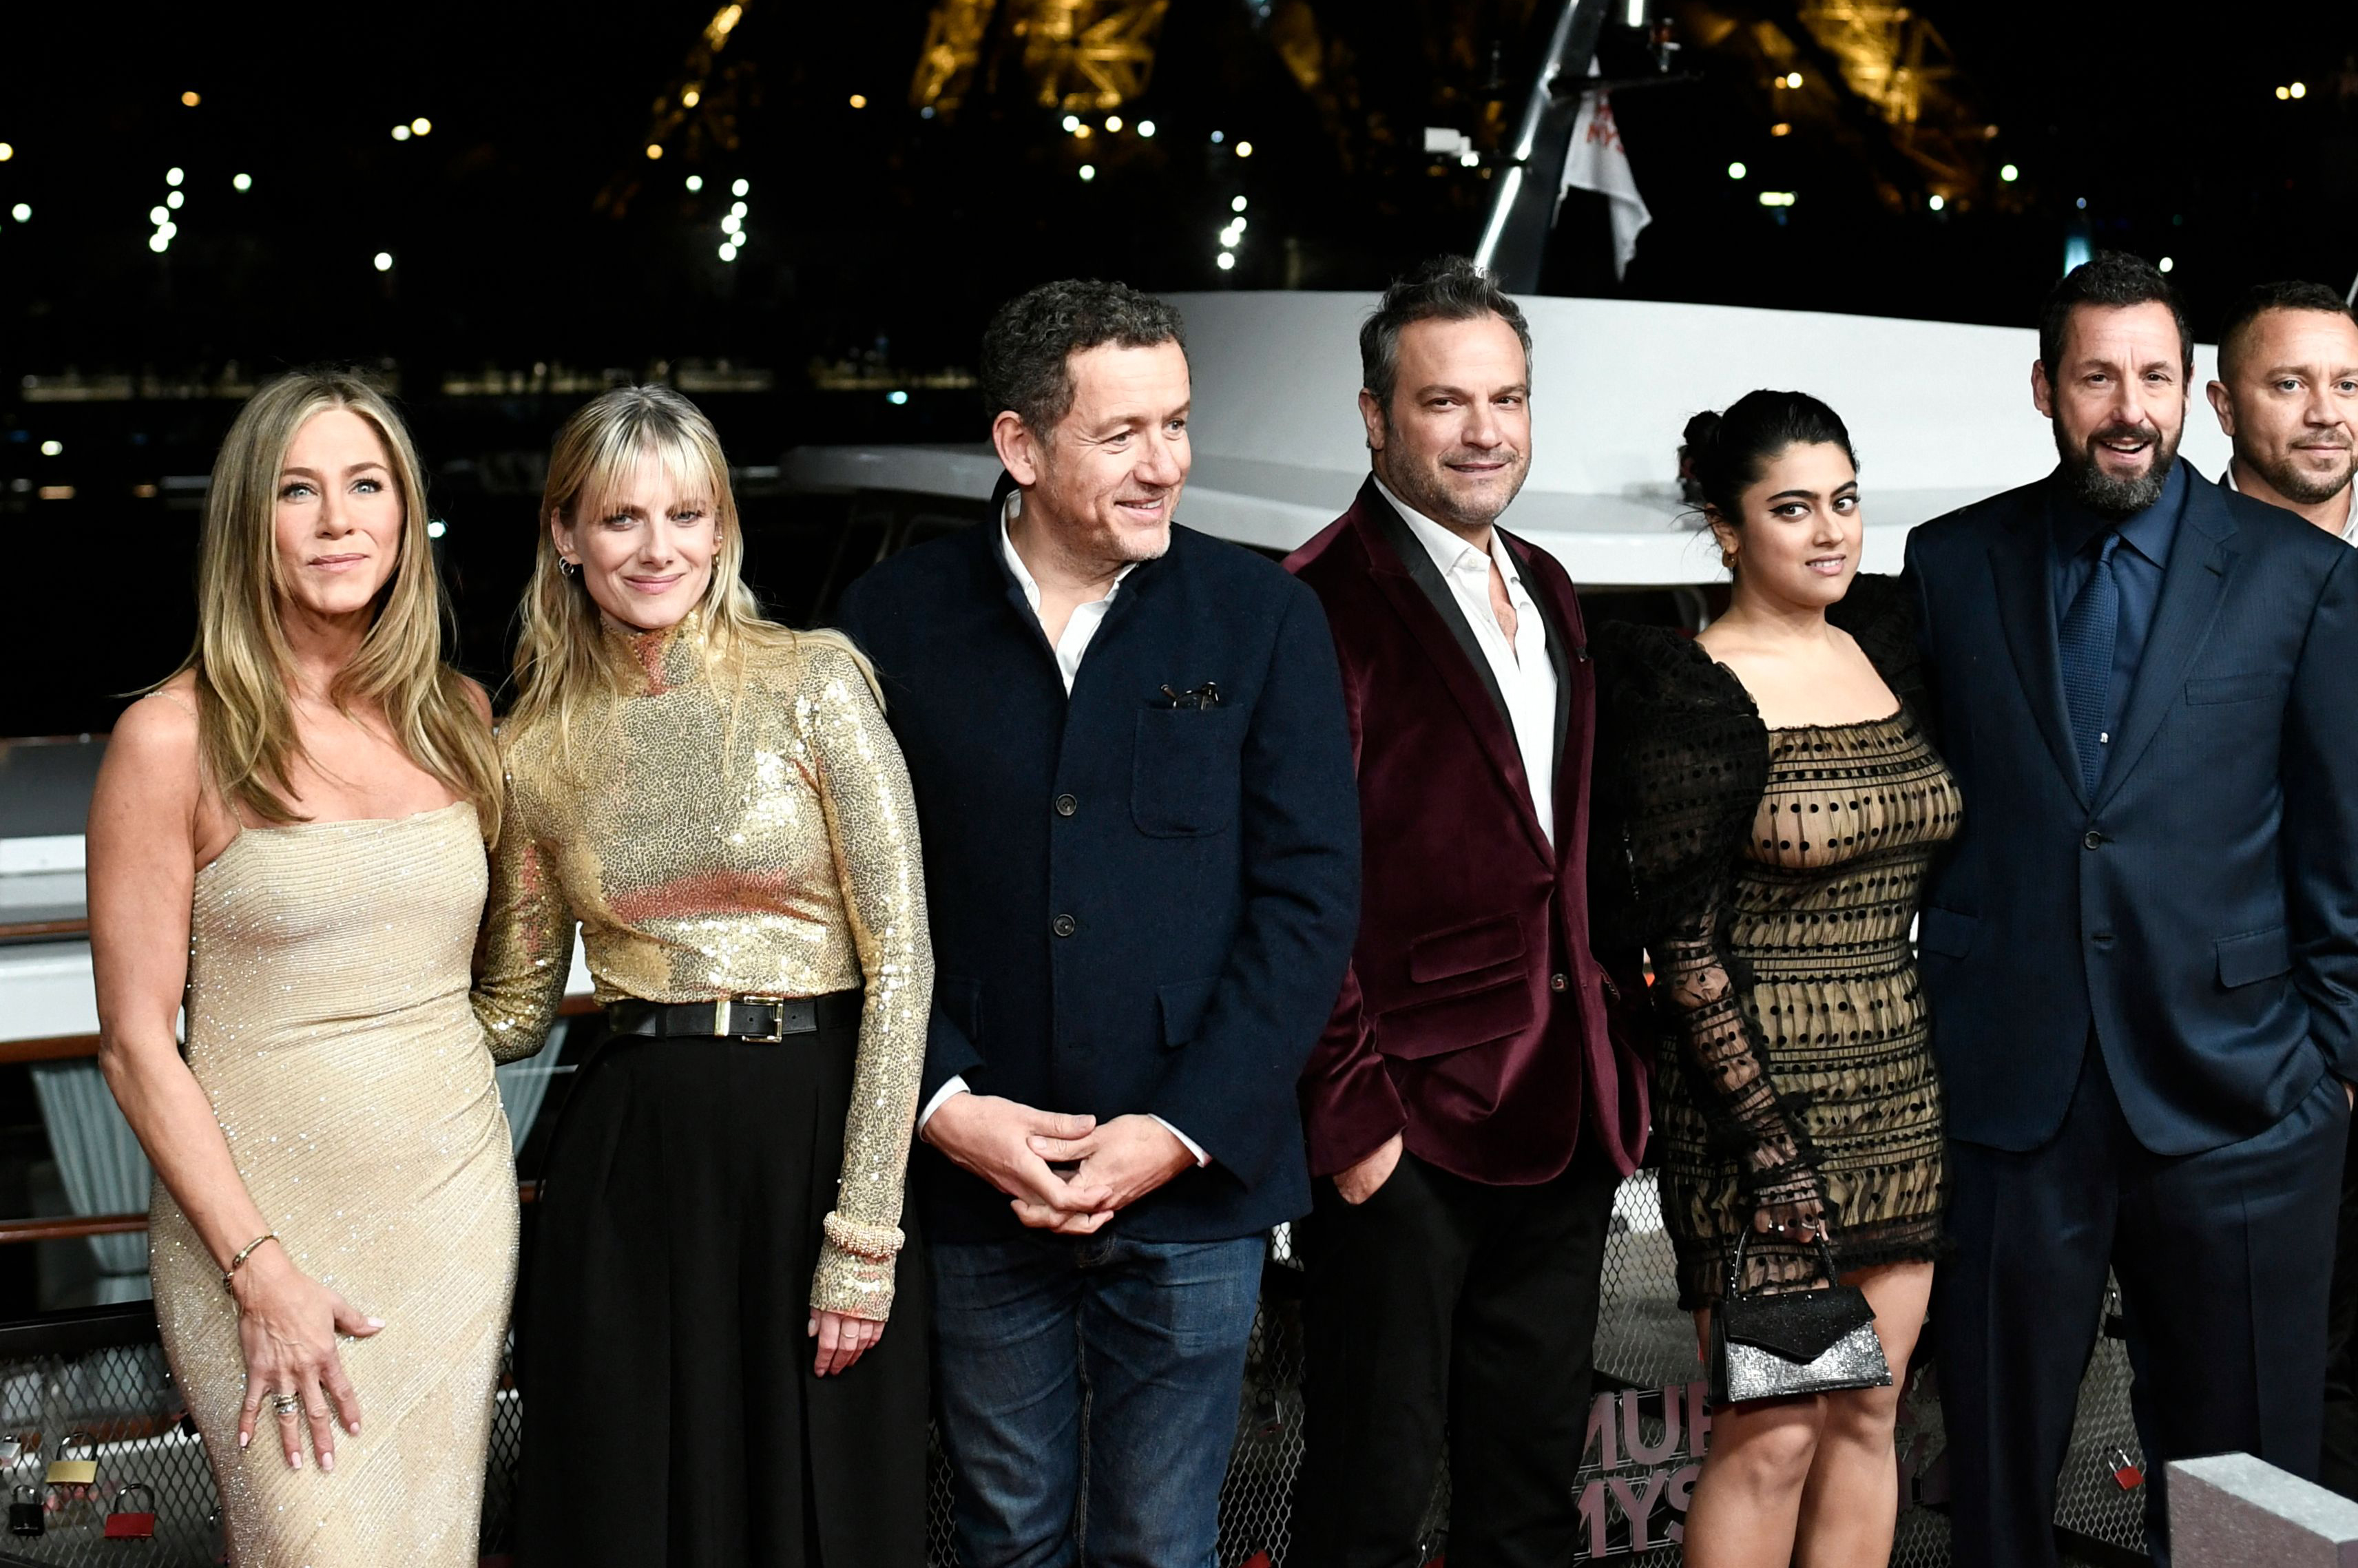 CNY's American High to premiere new Adam Sandler, Jennifer Aniston